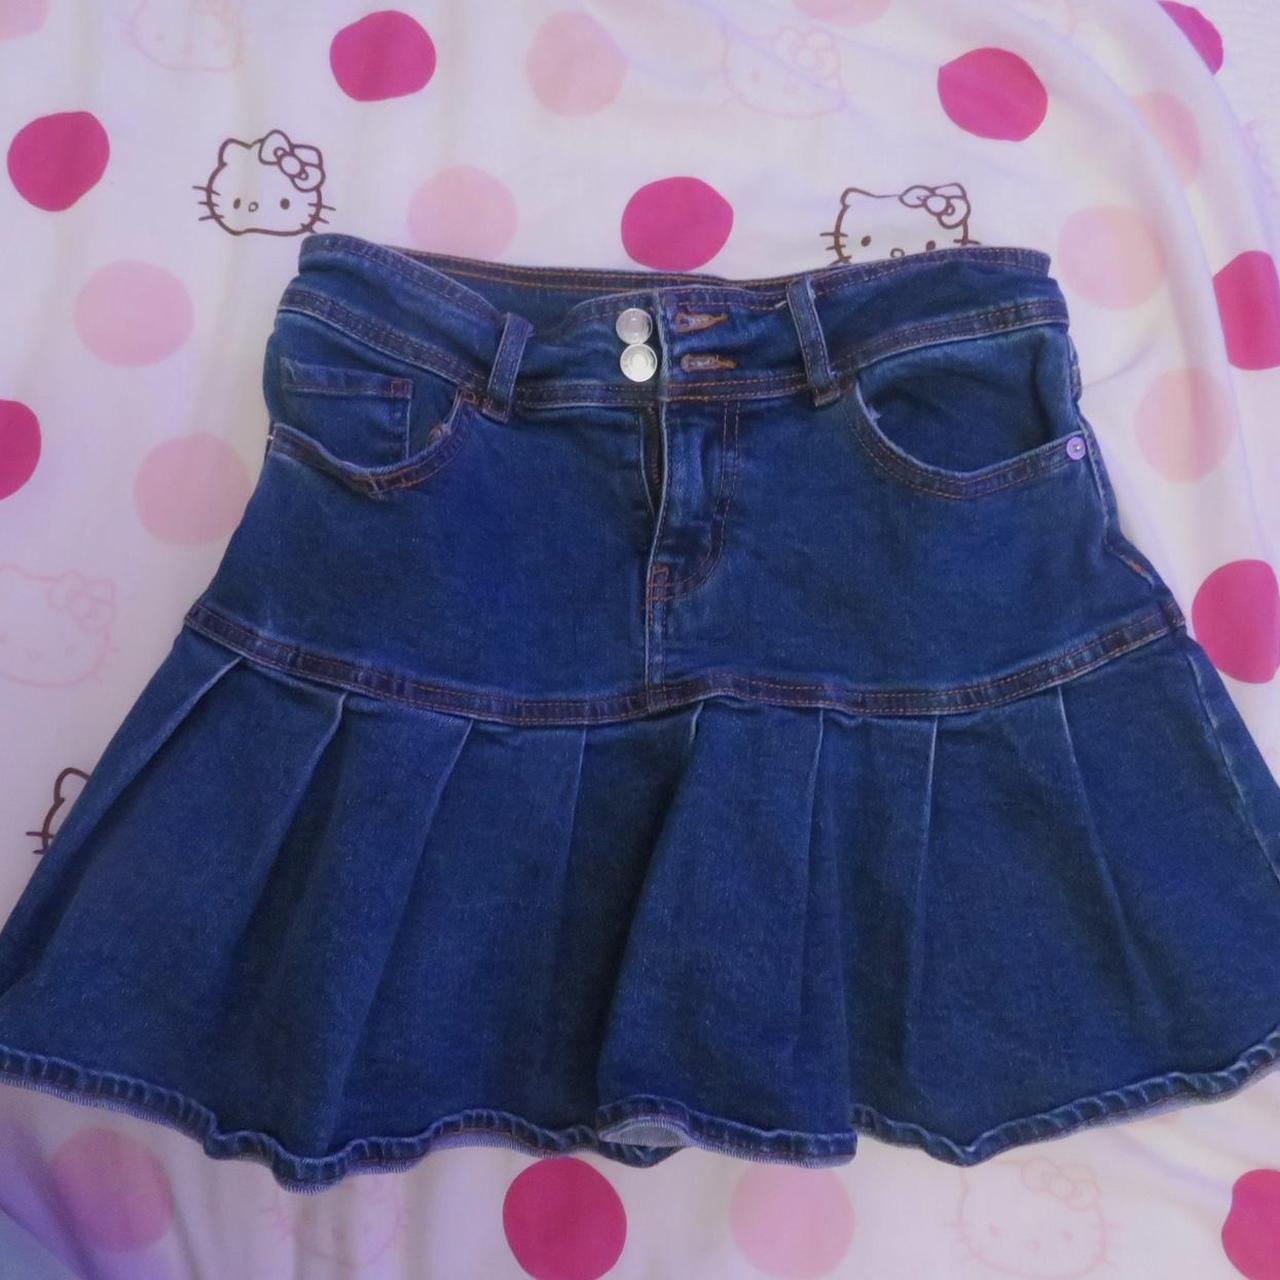 blue jean y2k denim mini skirt ── ⋆⋅☆⋅⋆ ── 𖦹 i got... - Depop